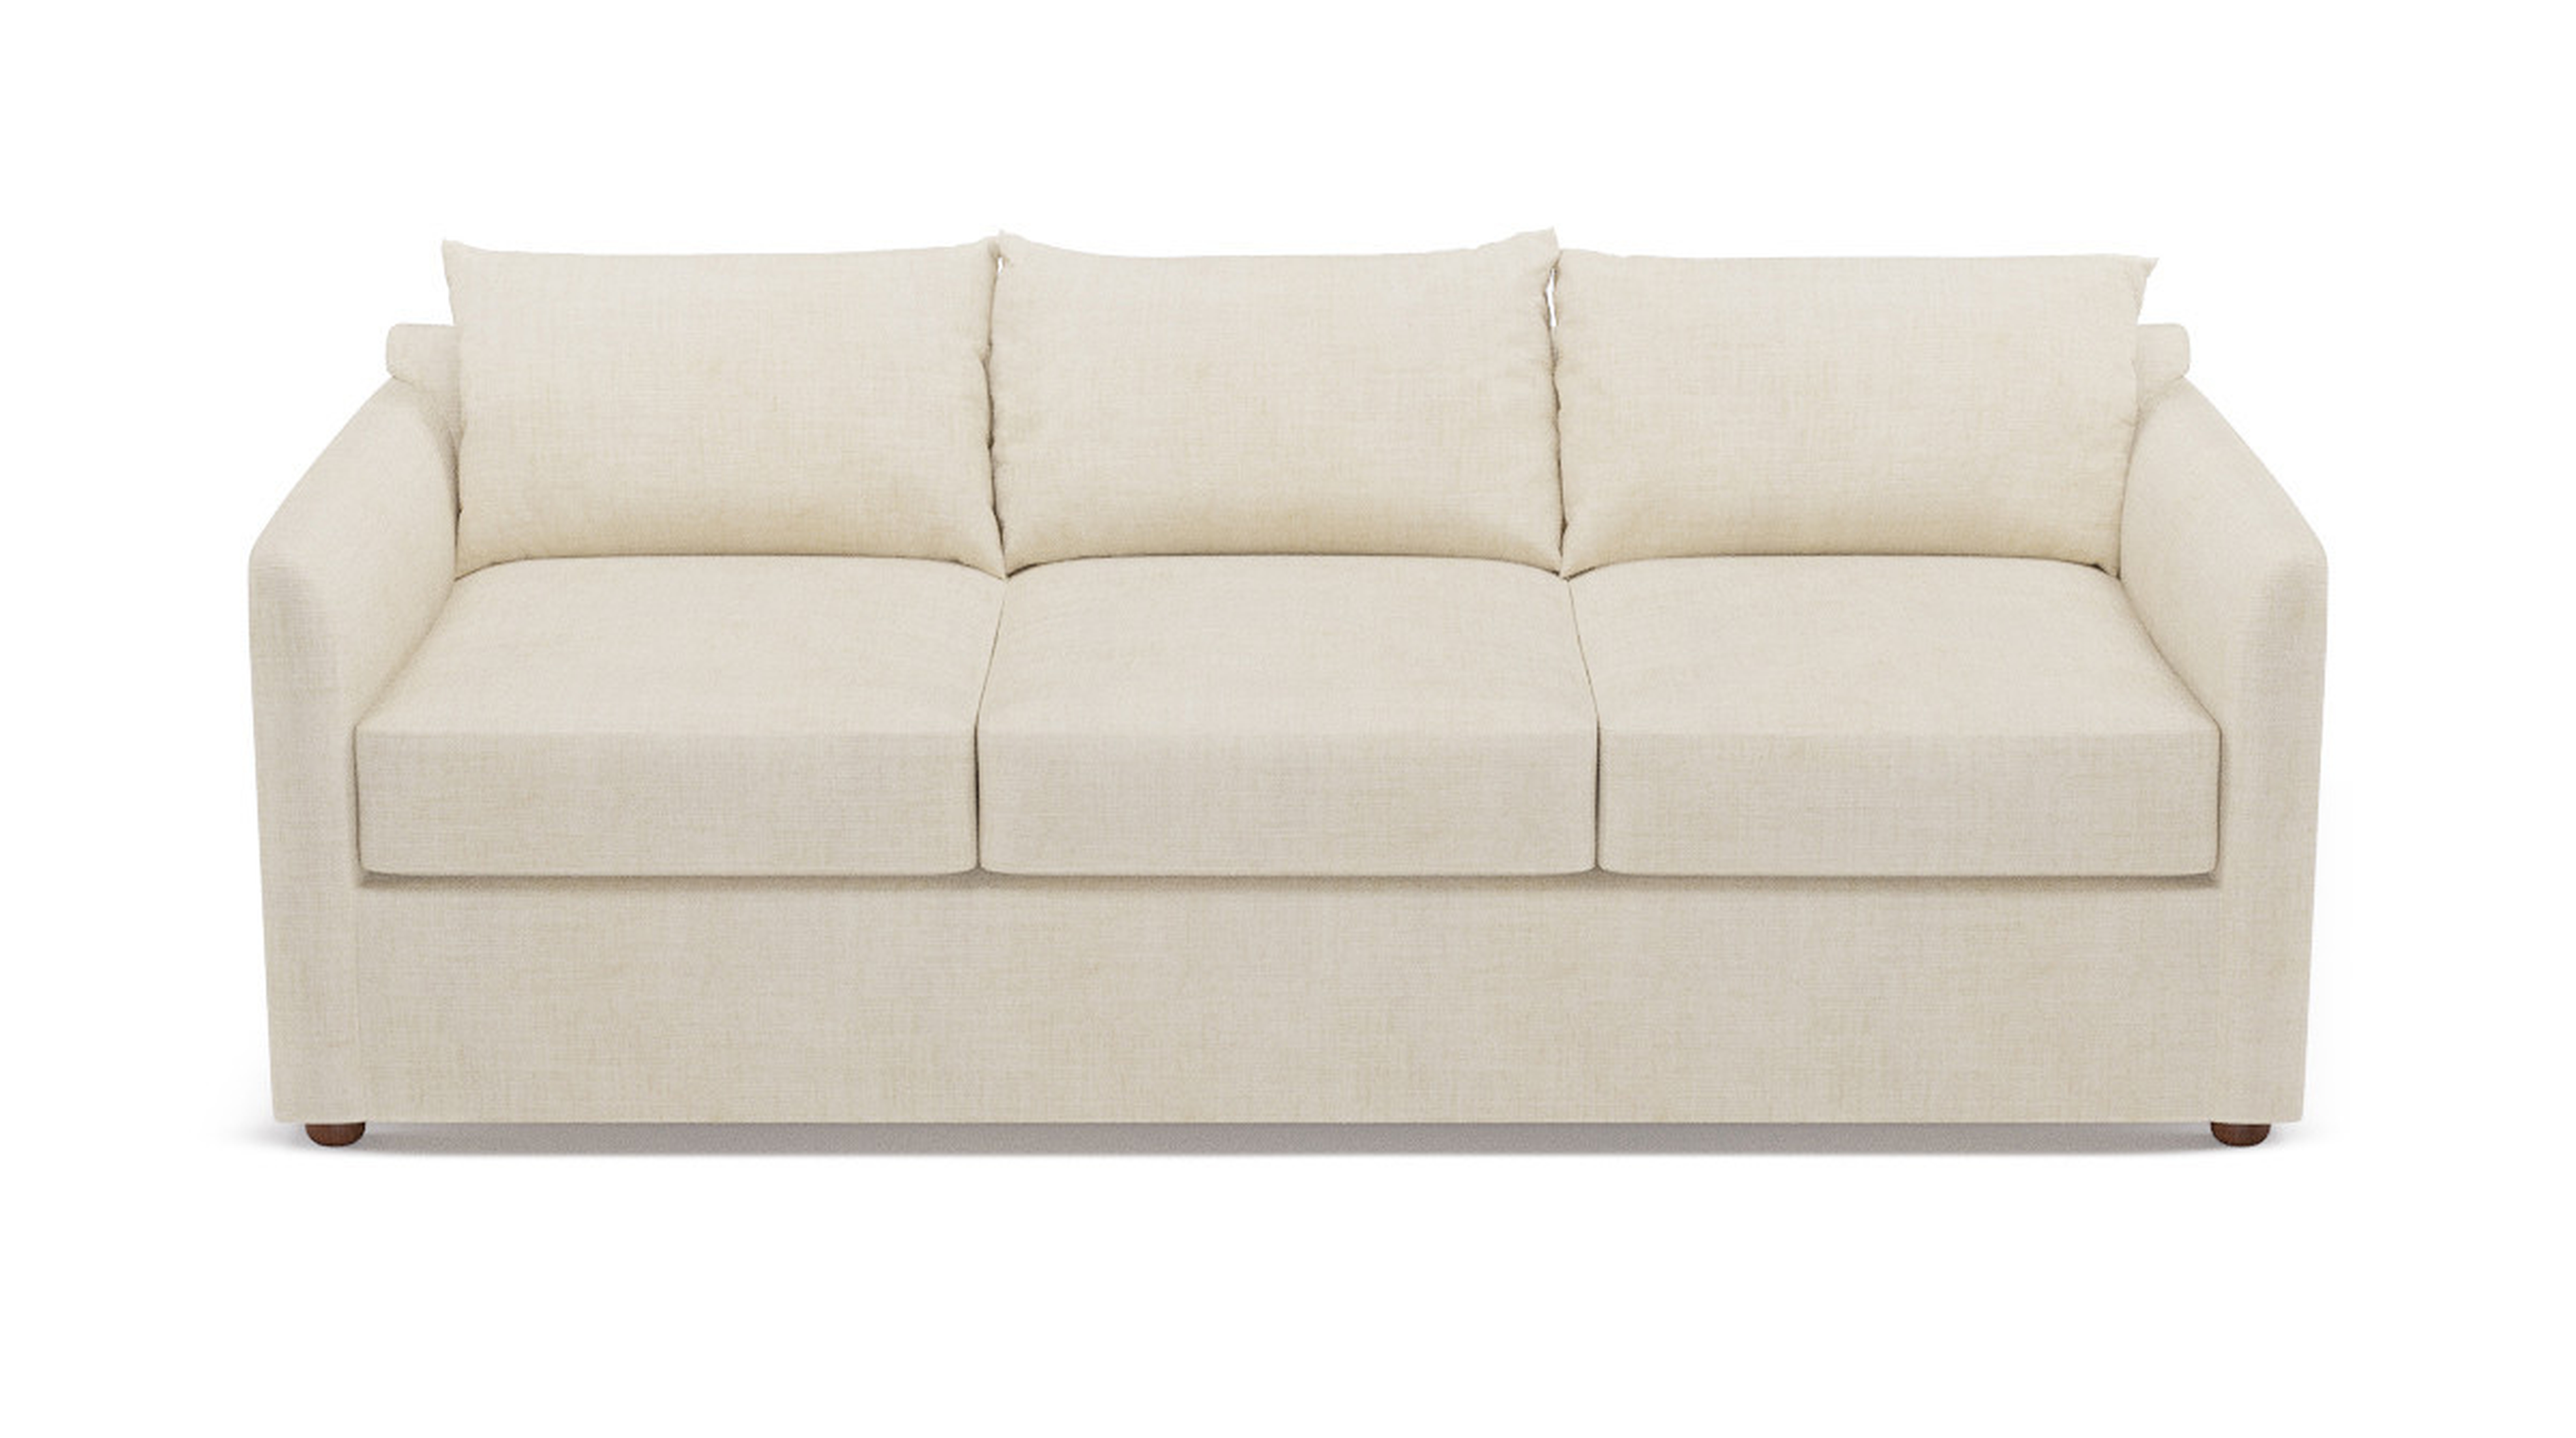 Tailored Sleeper Sofa | Talc Linen - The Inside